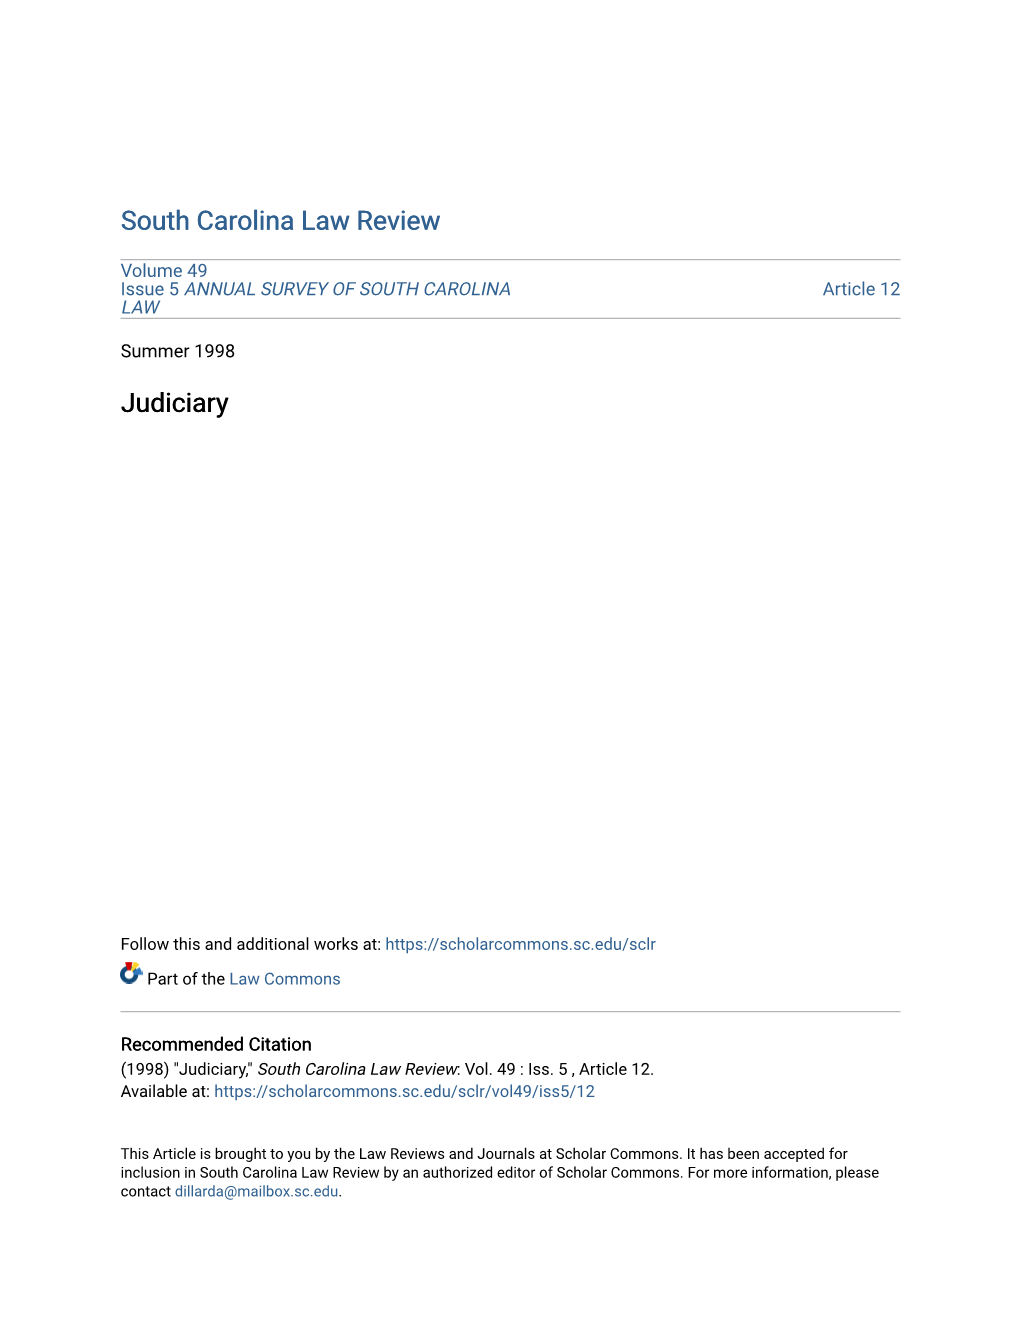 South Carolina Law Review Judiciary